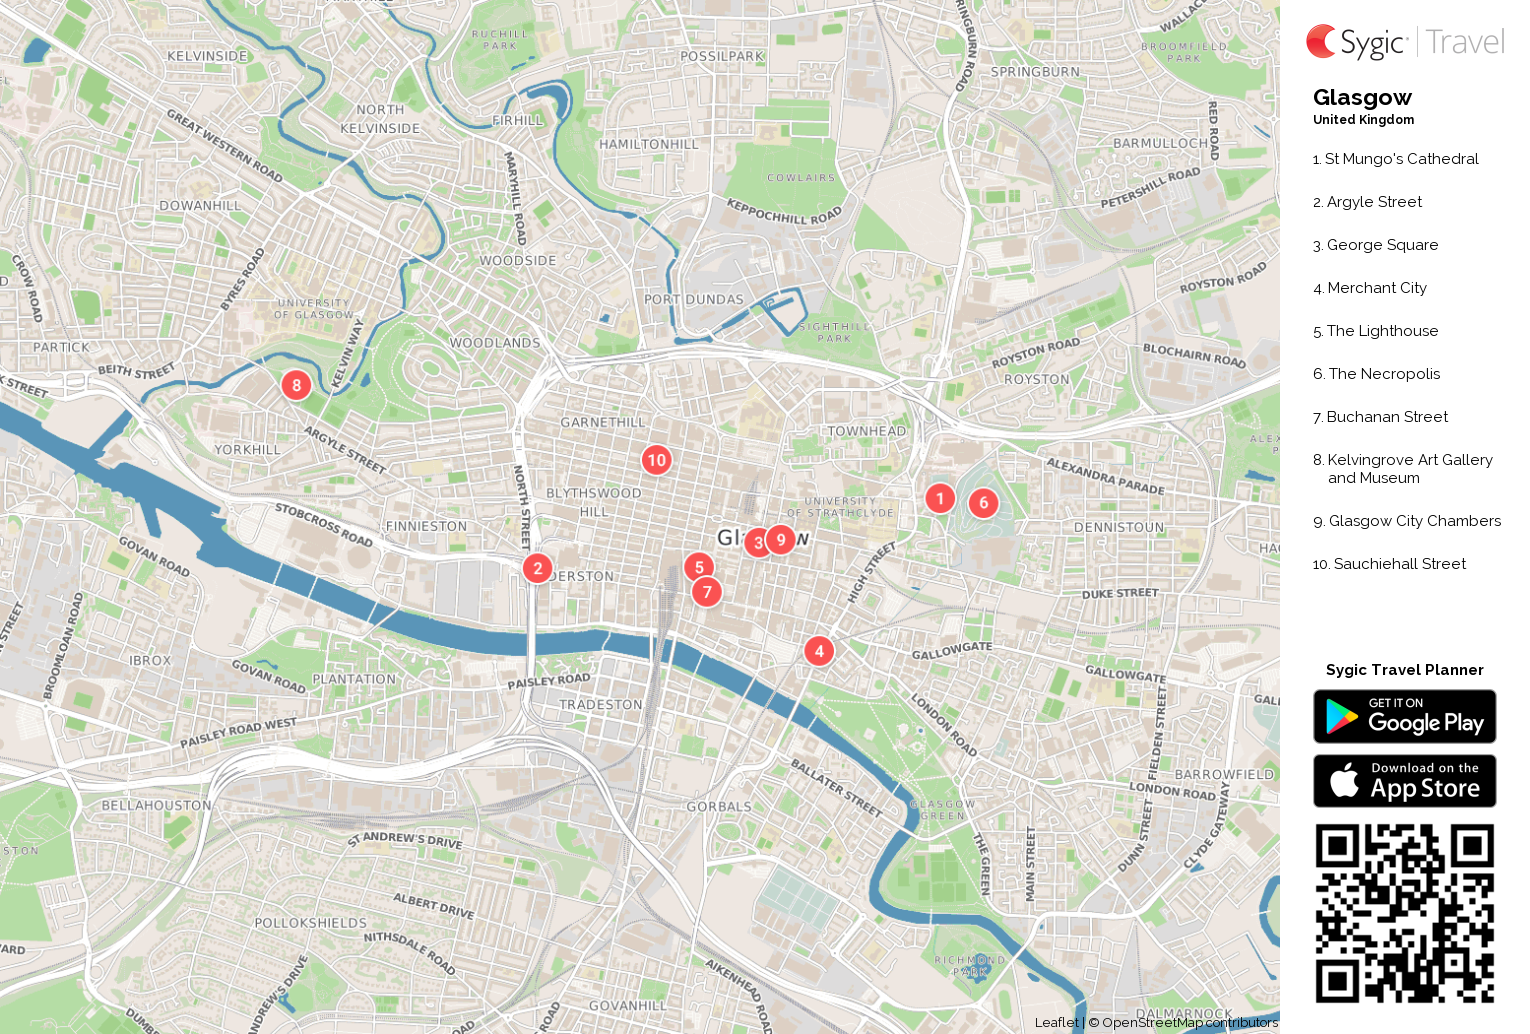 Street Map Of Glasgow City Centre Glasgow Printable Tourist Map | Sygic Travel